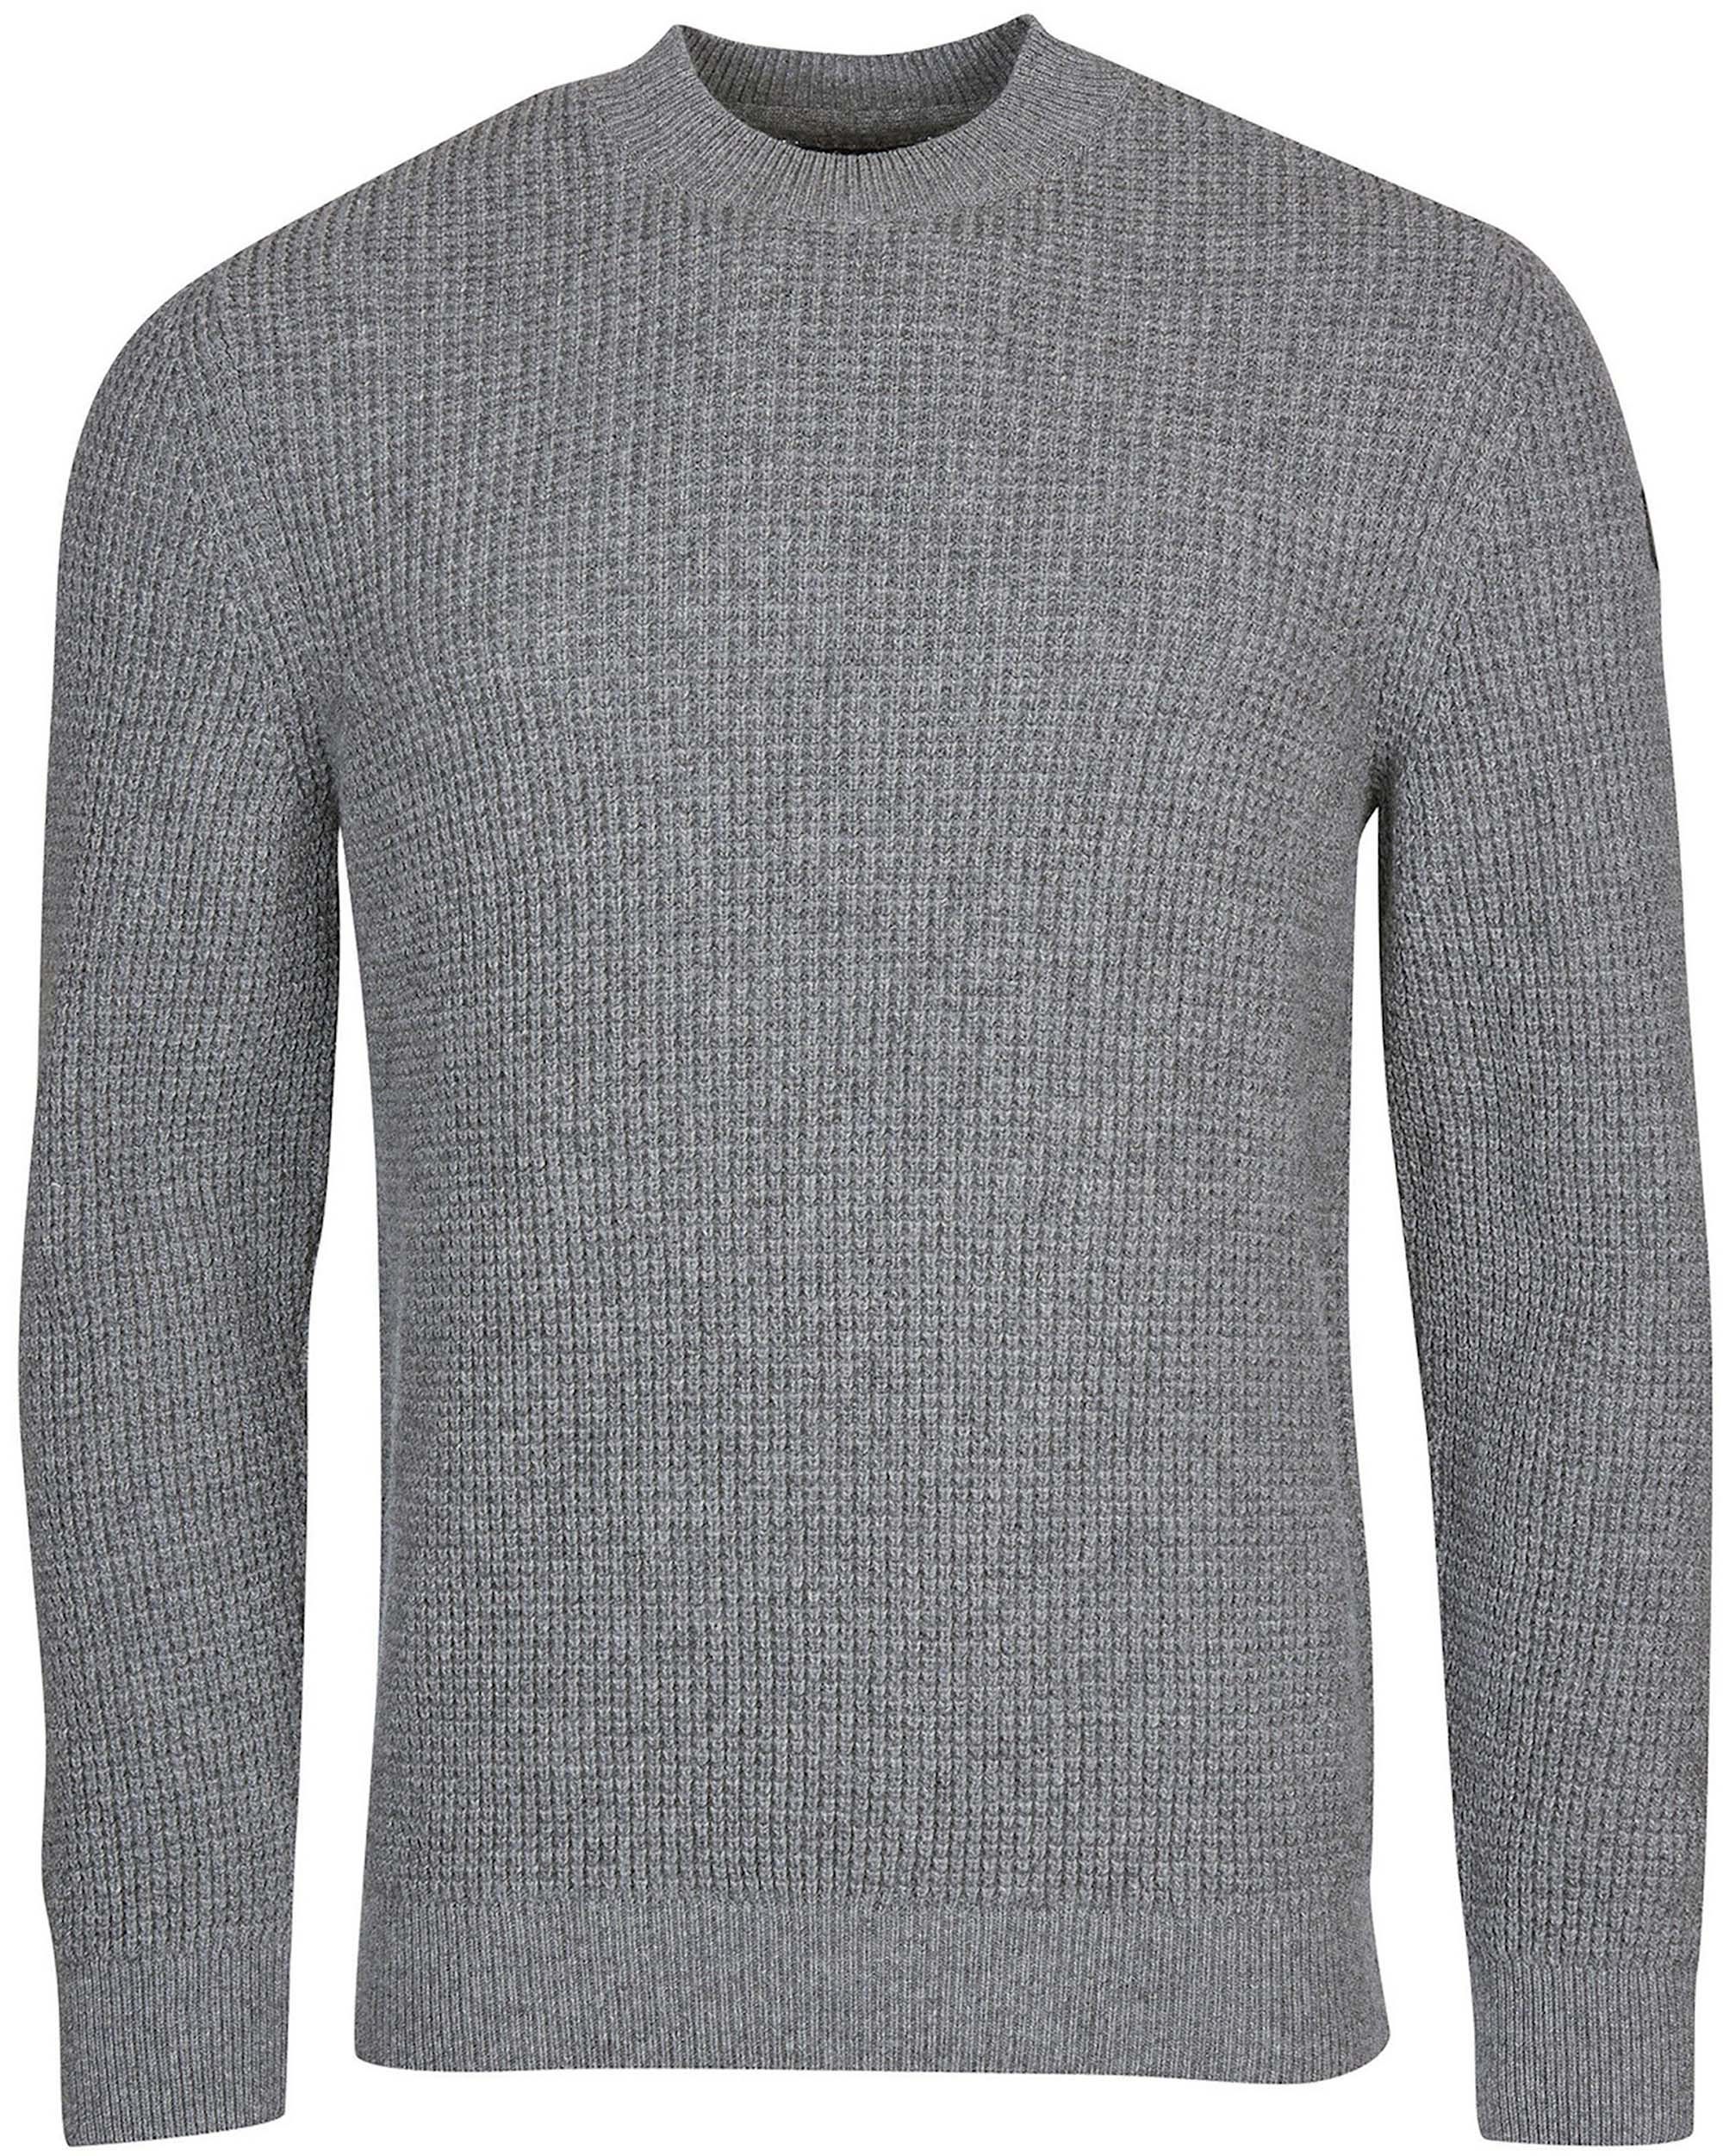 Barbour International Transmisson Sweater Knitted Anthracite Dark Grey Grey size XL